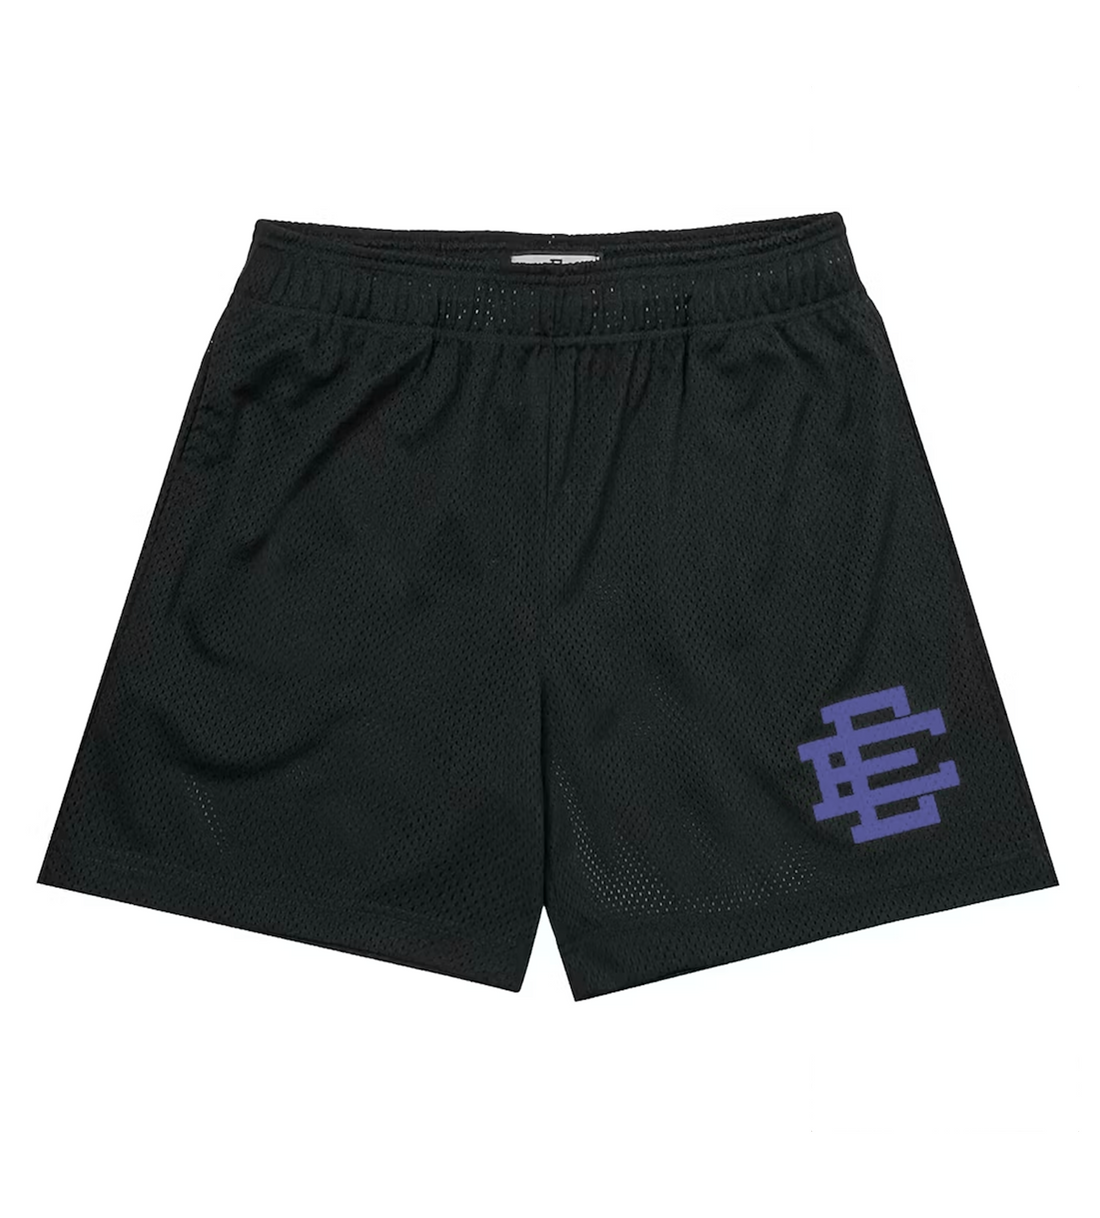 Eric Emanuel Black Navy Shorts